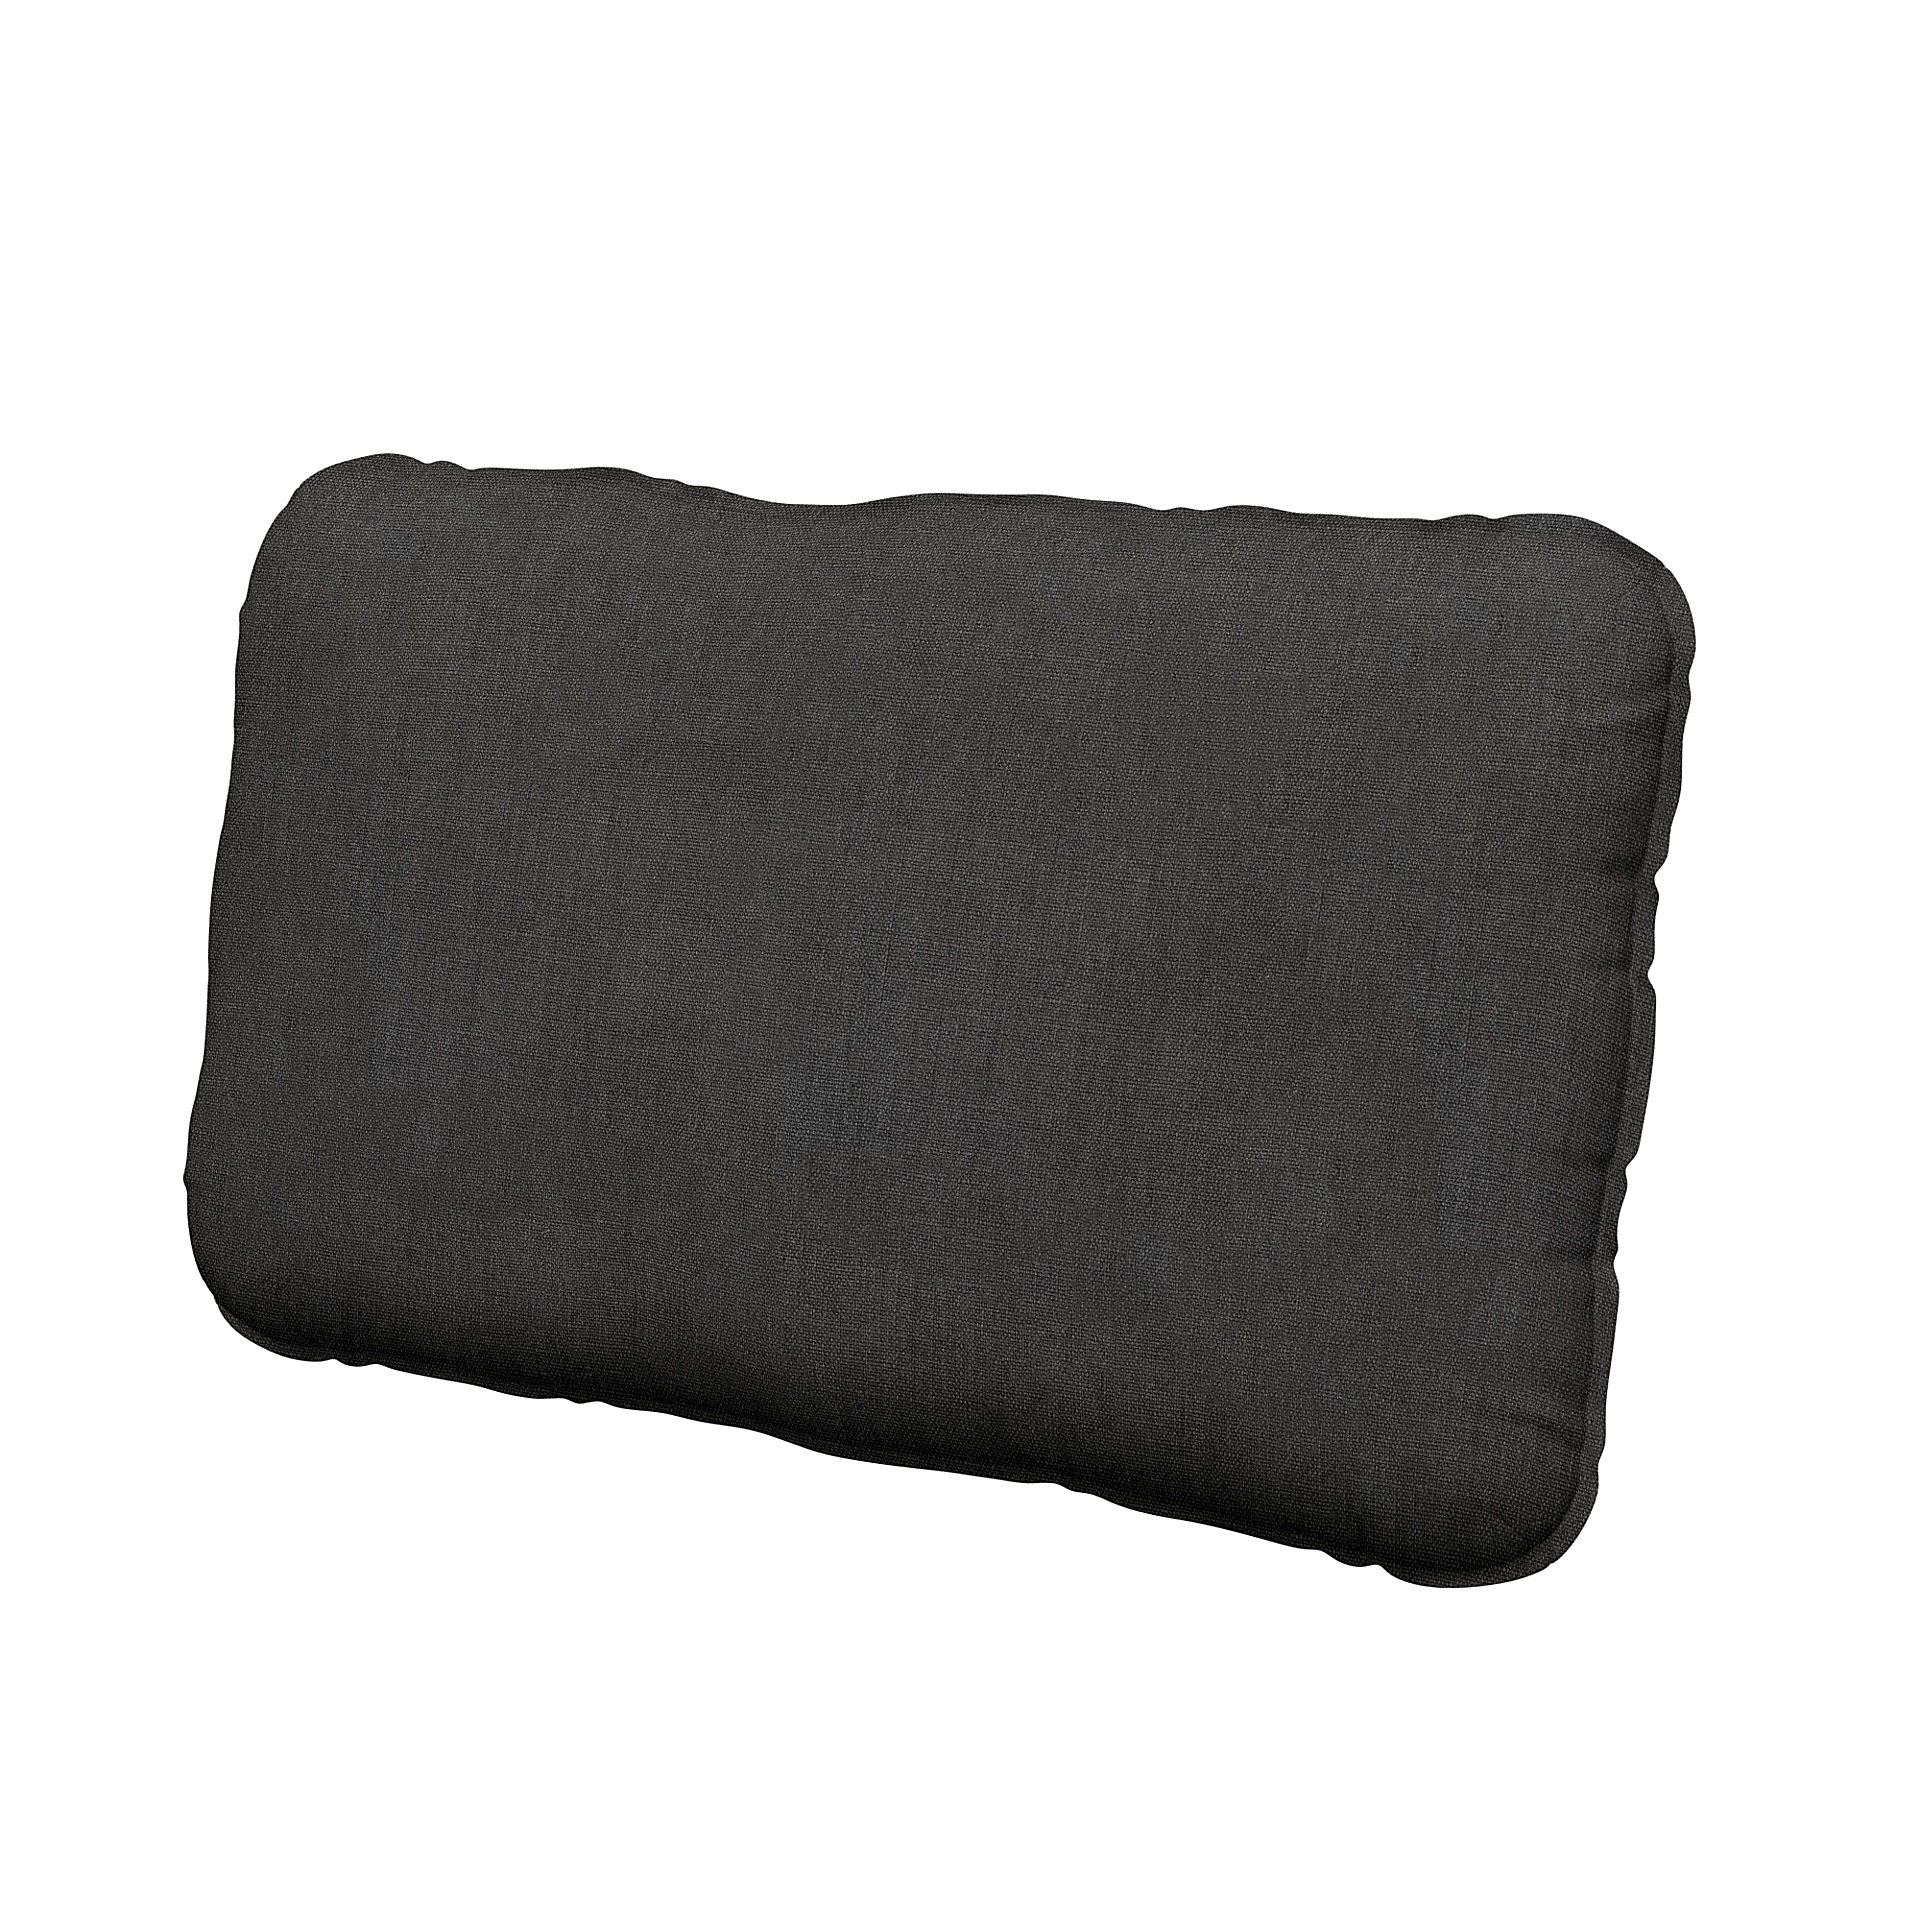 IKEA - Vallentuna back cushion cover 40x75cm, Espresso, Linen - Bemz